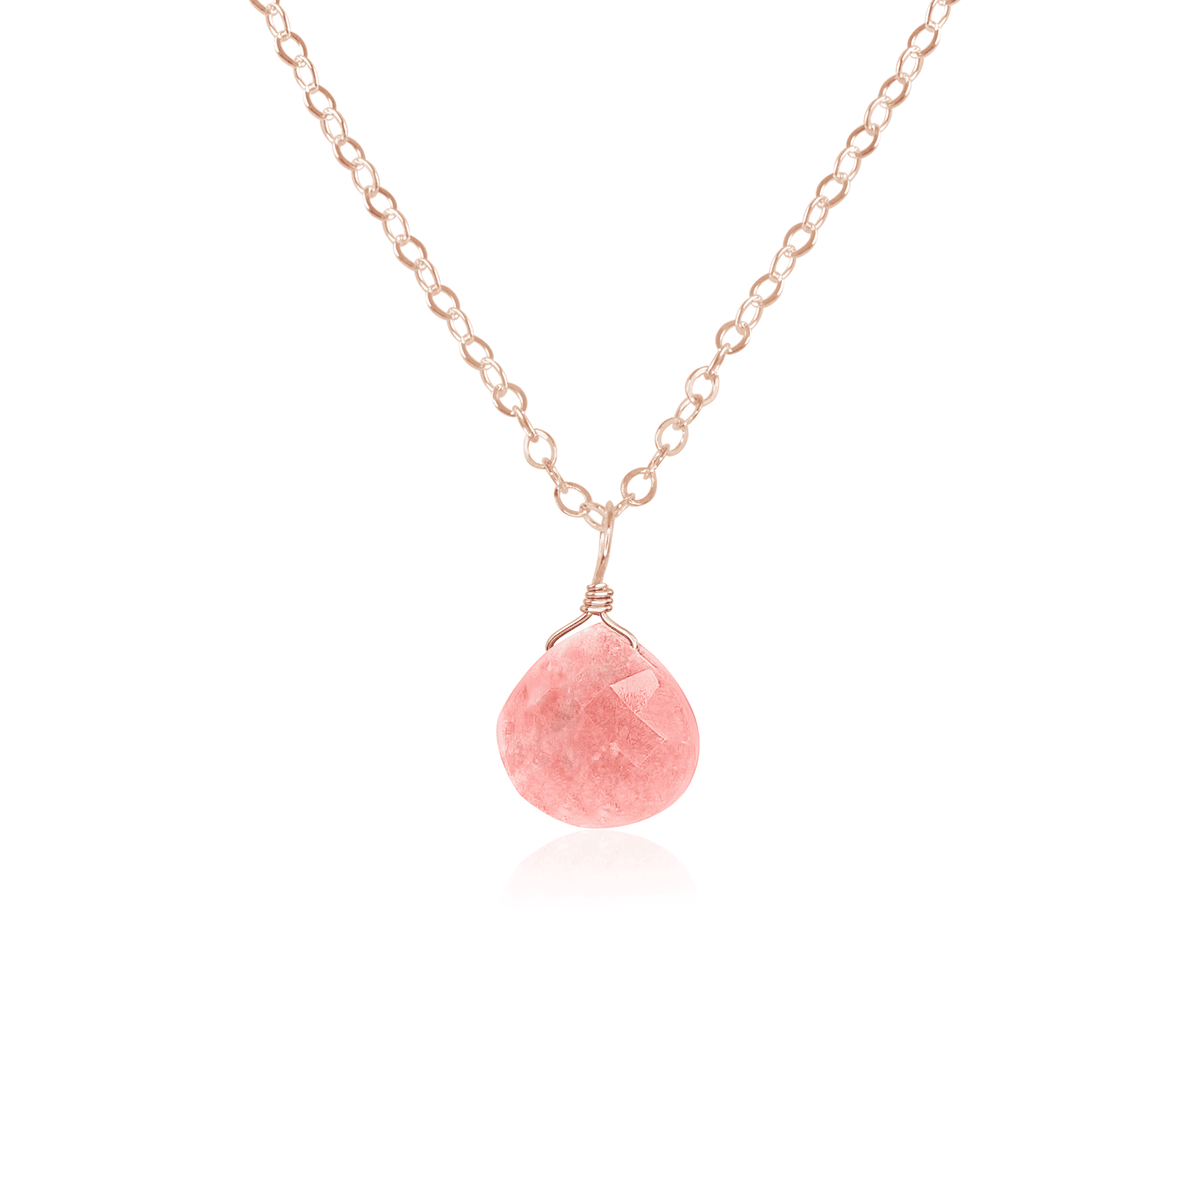 Teardrop Necklace - Pink Peruvian Opal - 14K Rose Gold Fill - Luna Tide Handmade Jewellery